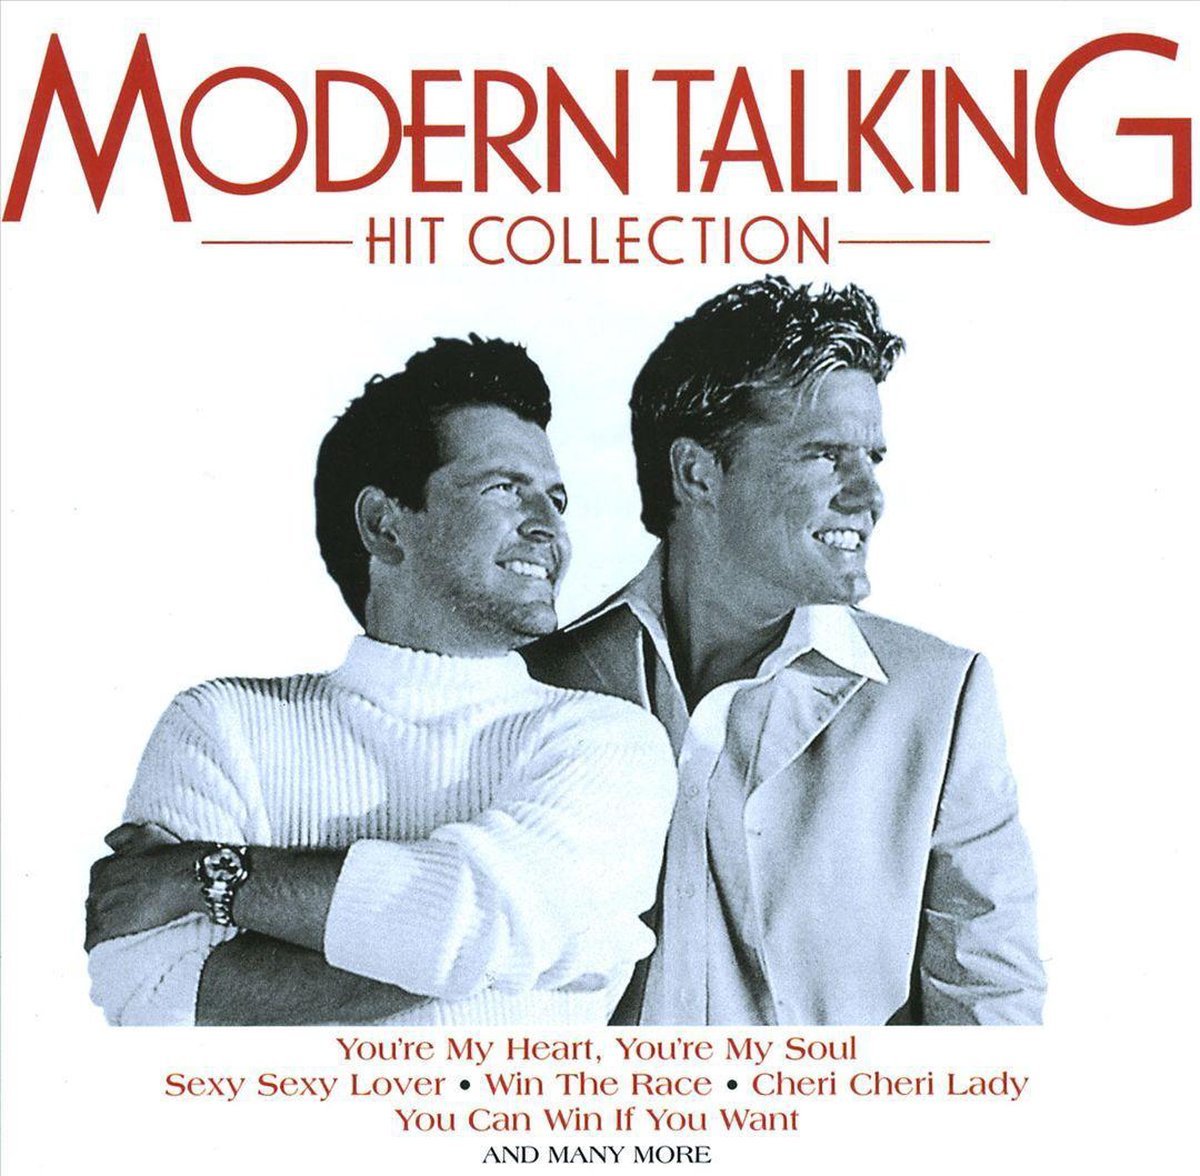 Talking collection. Группа Modern talking. Modern talking America обложка. Modern talking обложки альбомов. Modern talking Hits collection.